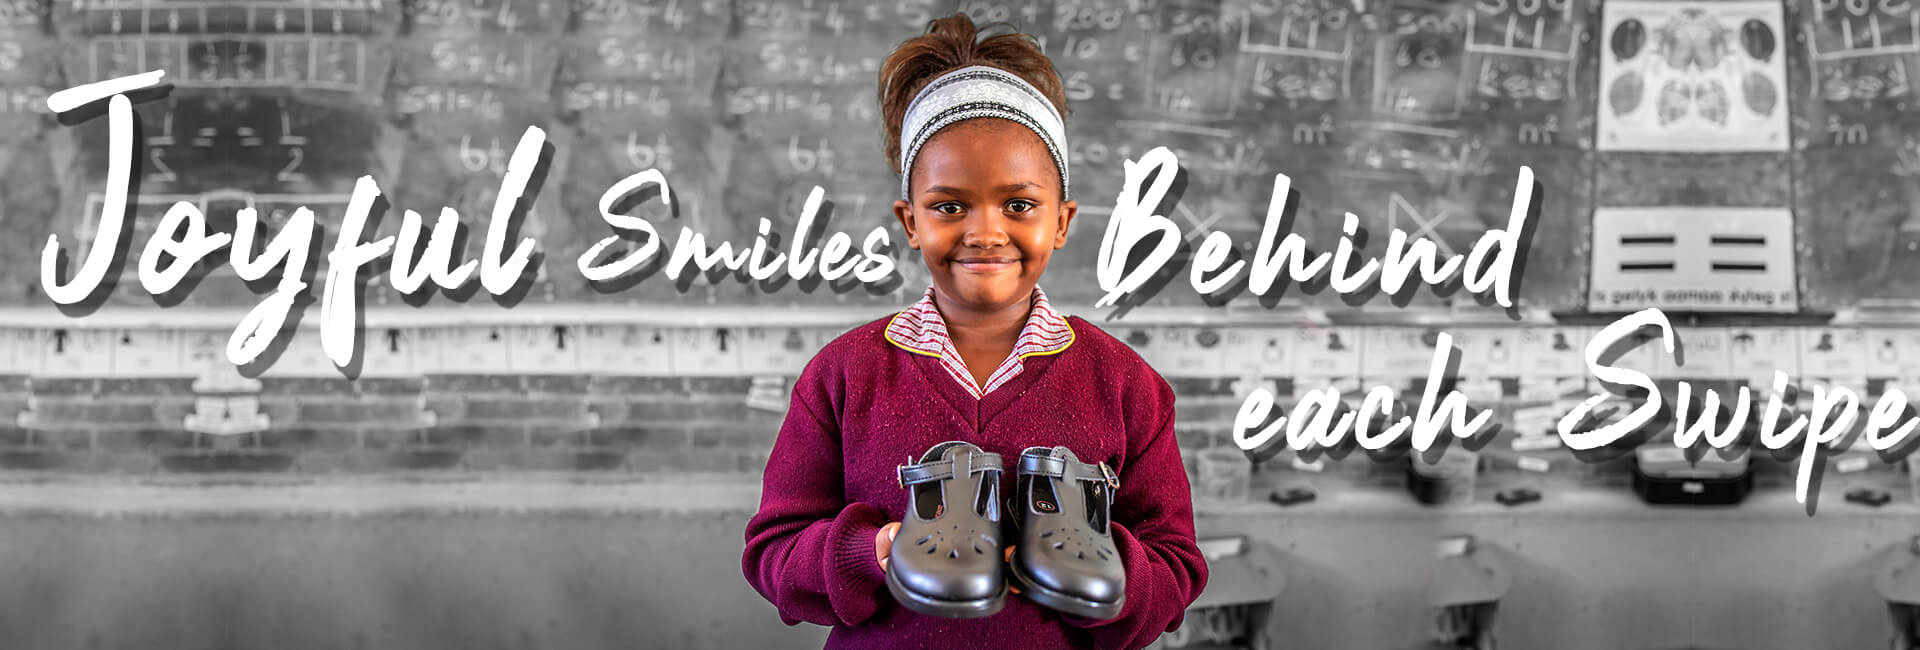 Joyful Smiles accepting school shoes